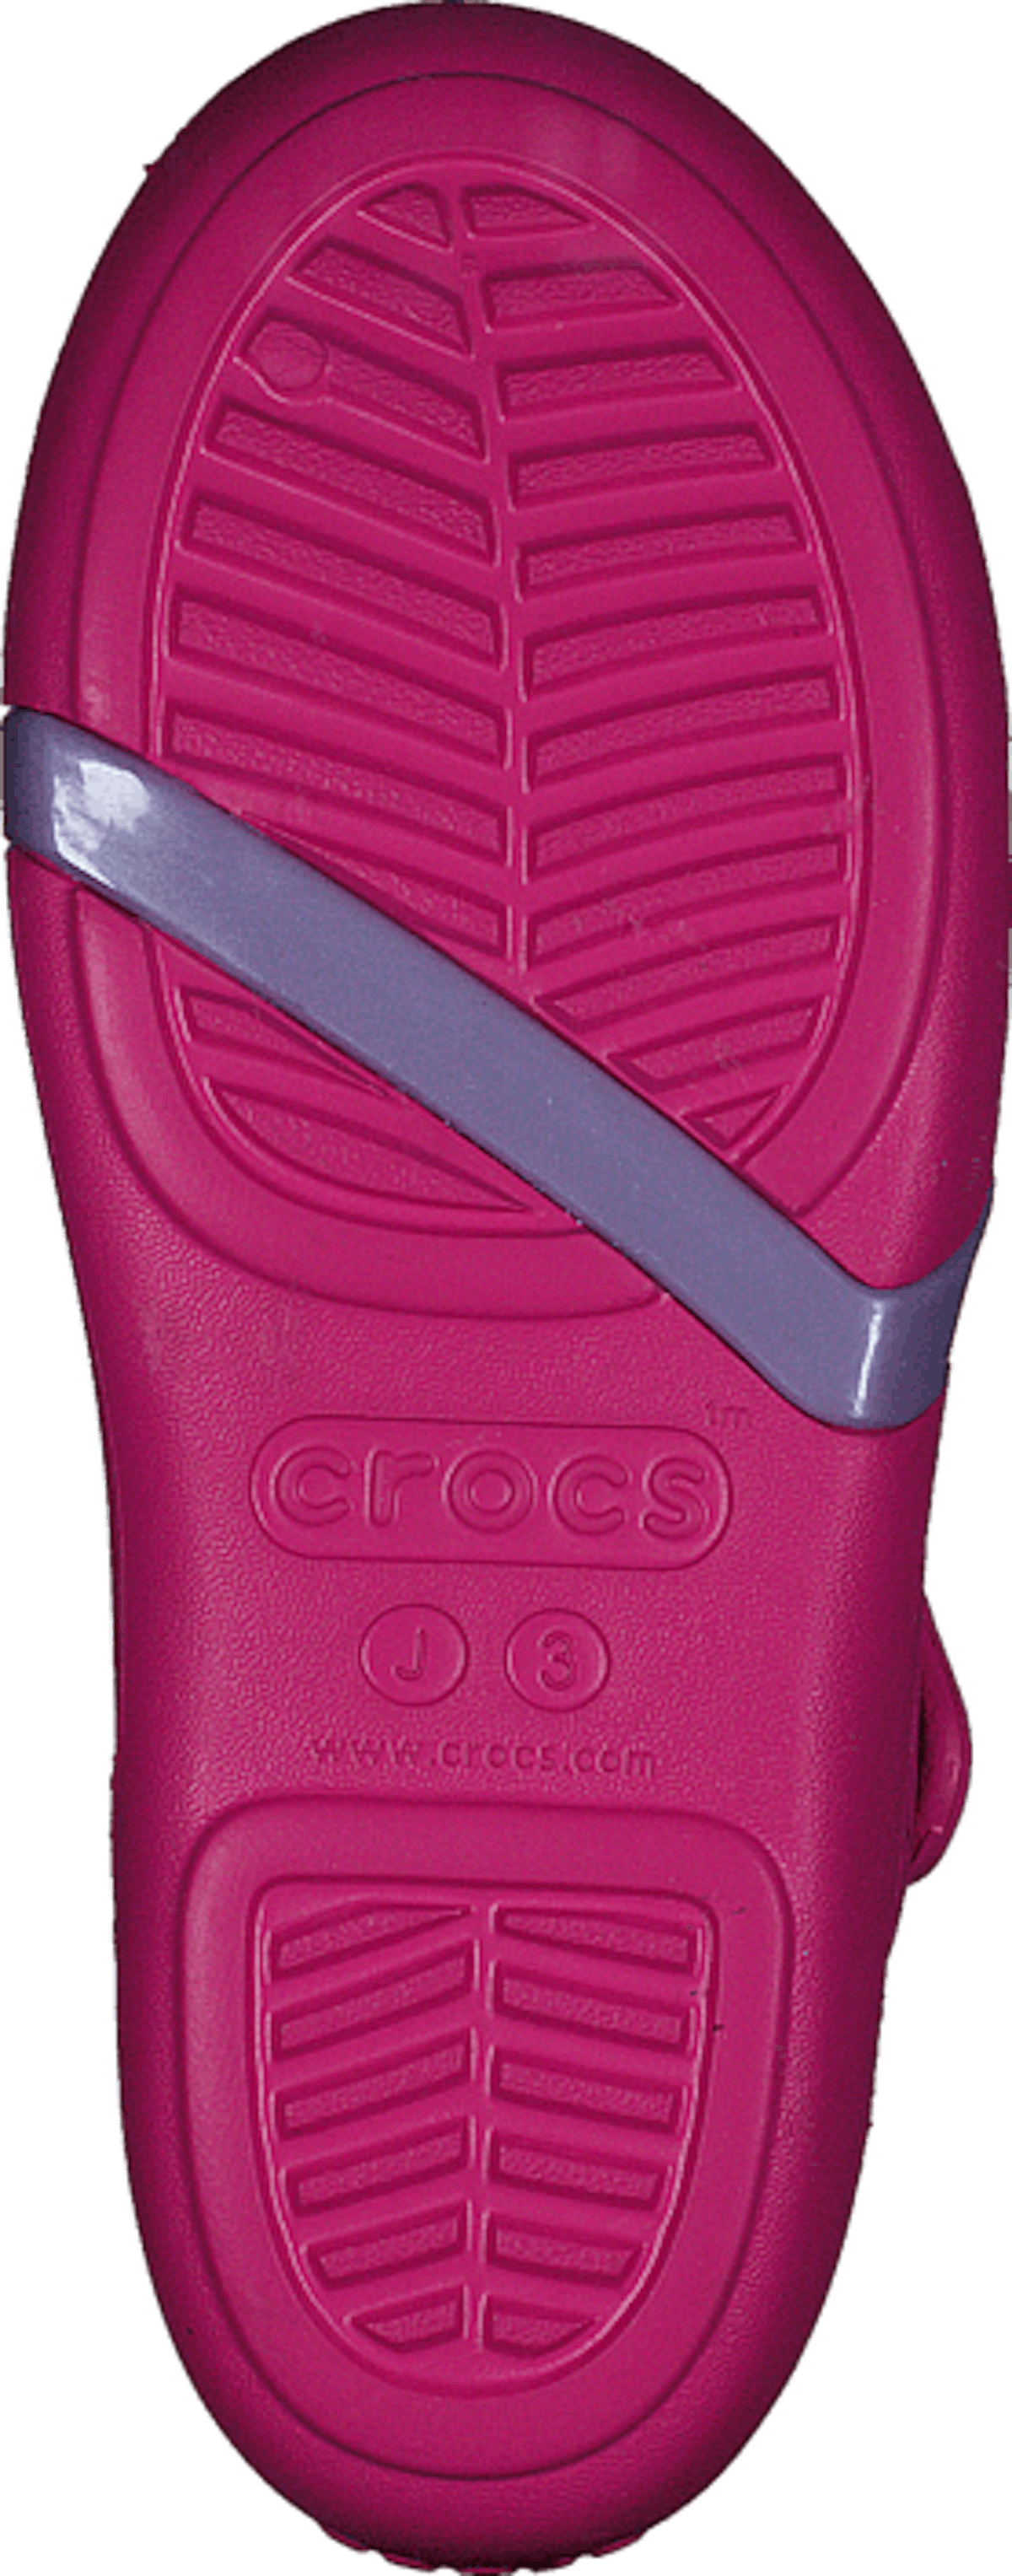 Crocs Lina Sandal K Candy Pink